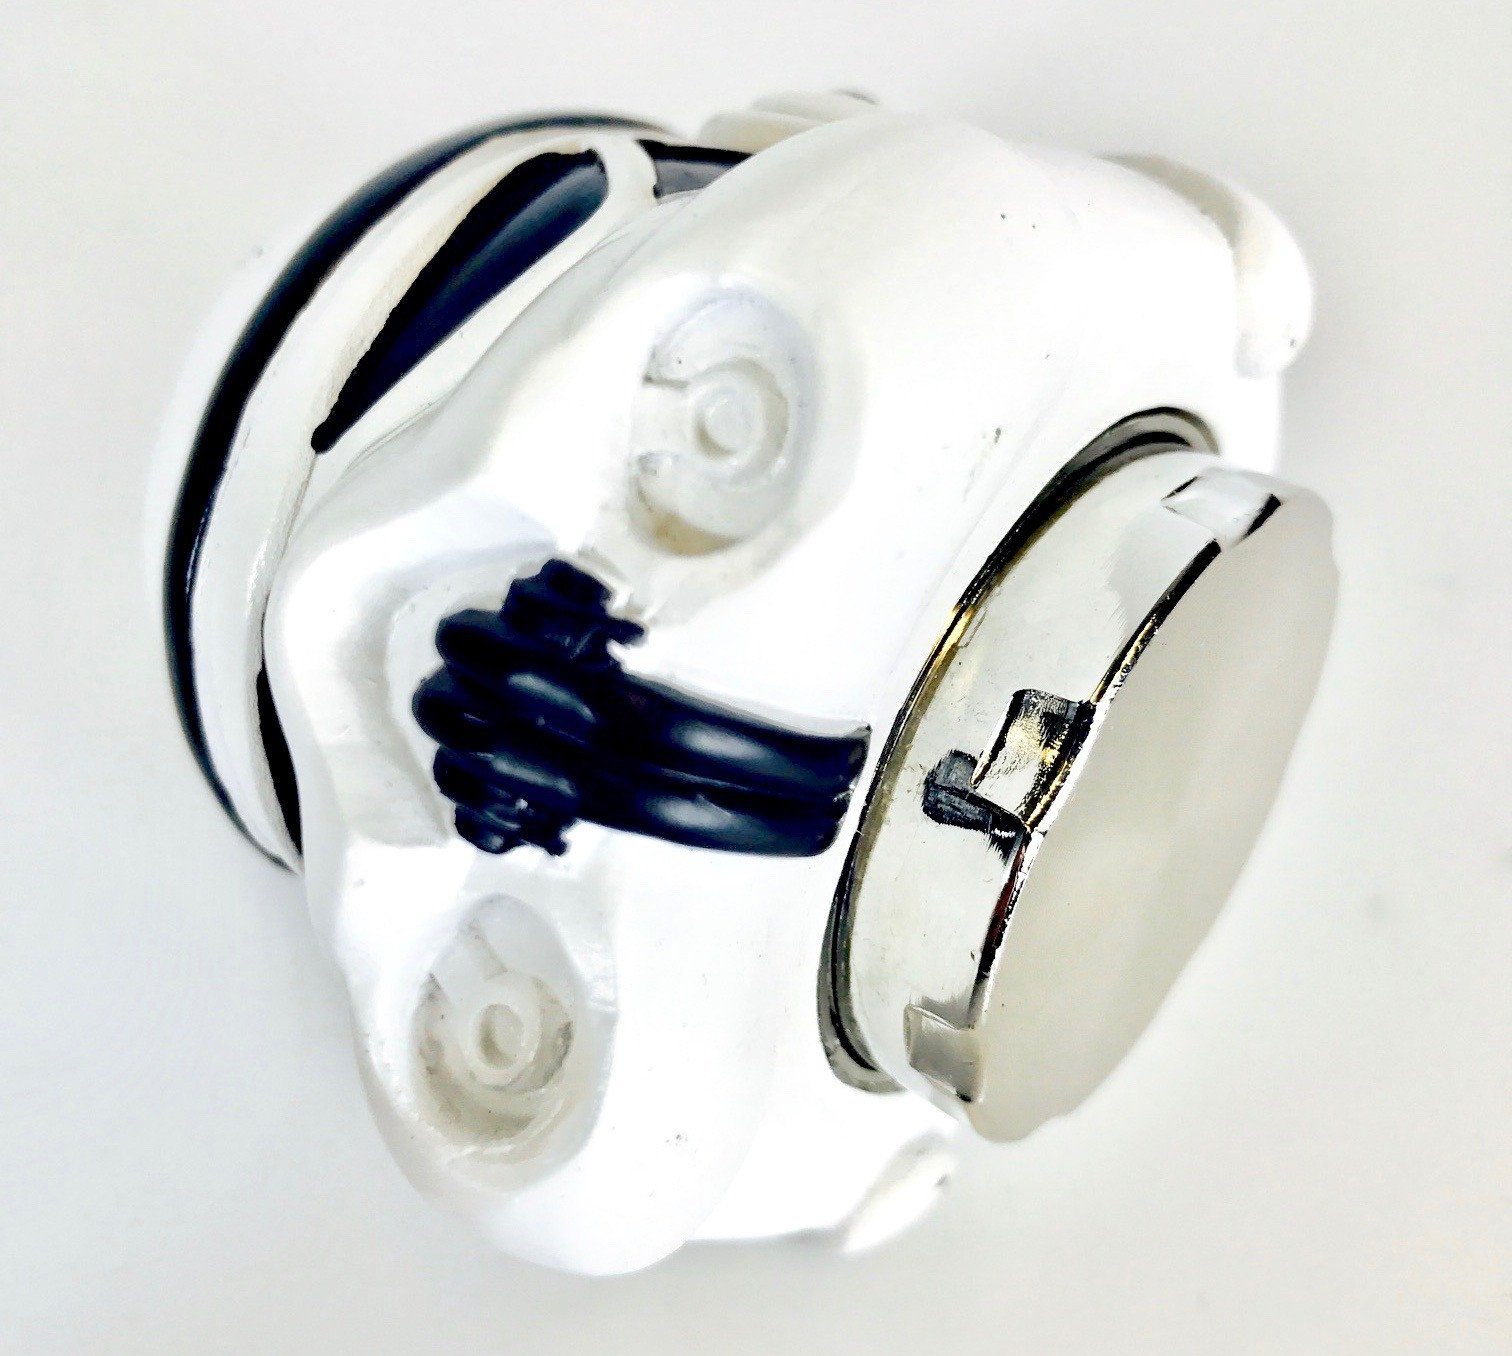 White Helmet Grinder Flower Power Packages 